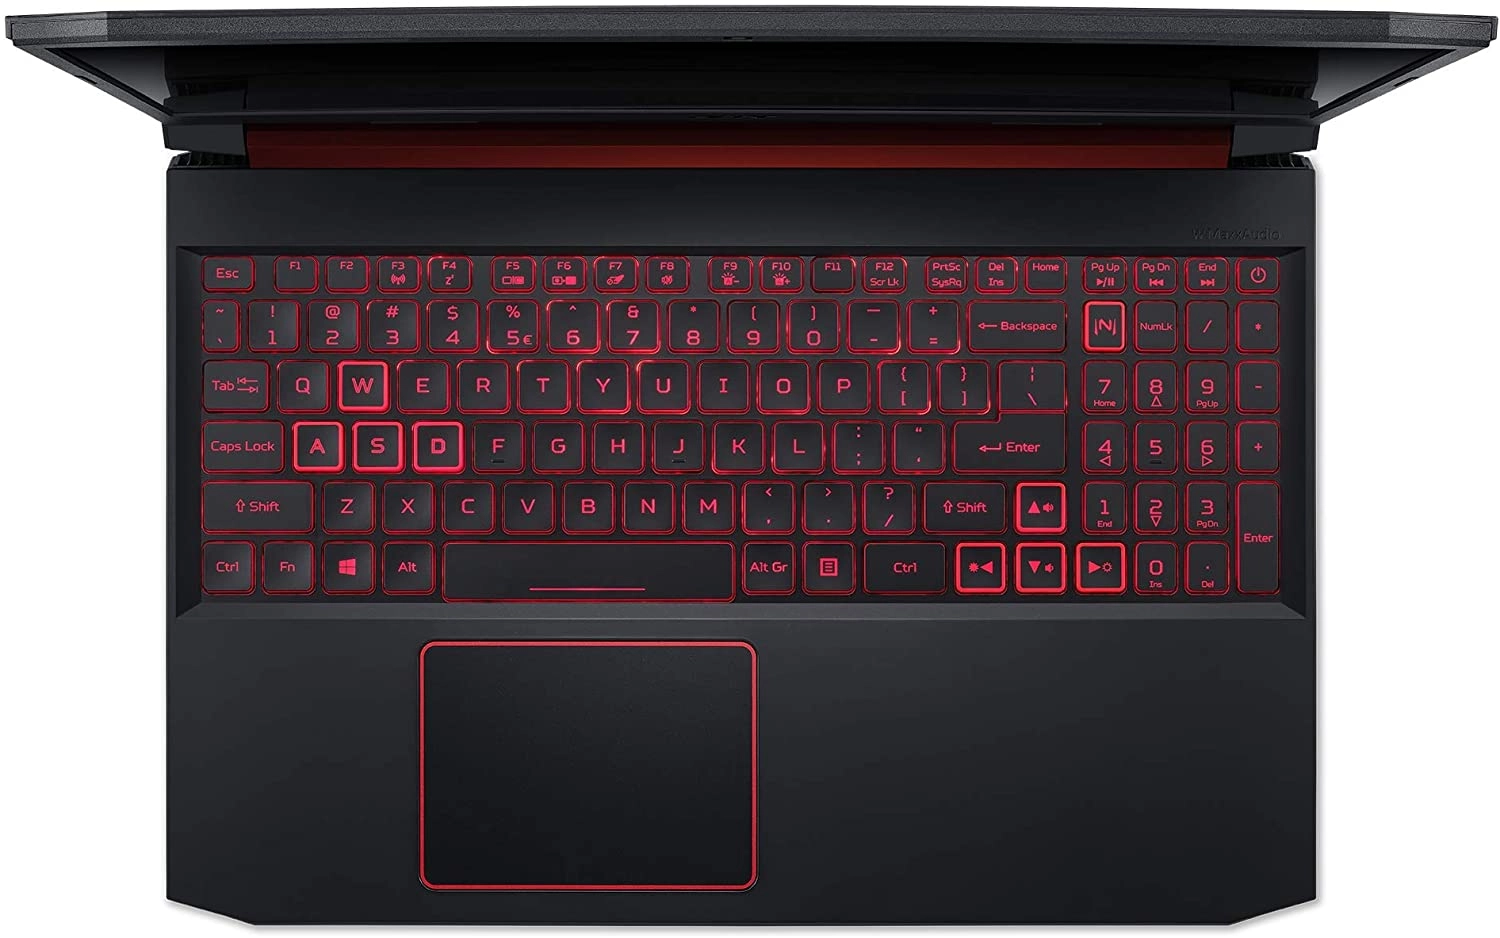 Acer AN515-54 laptop image